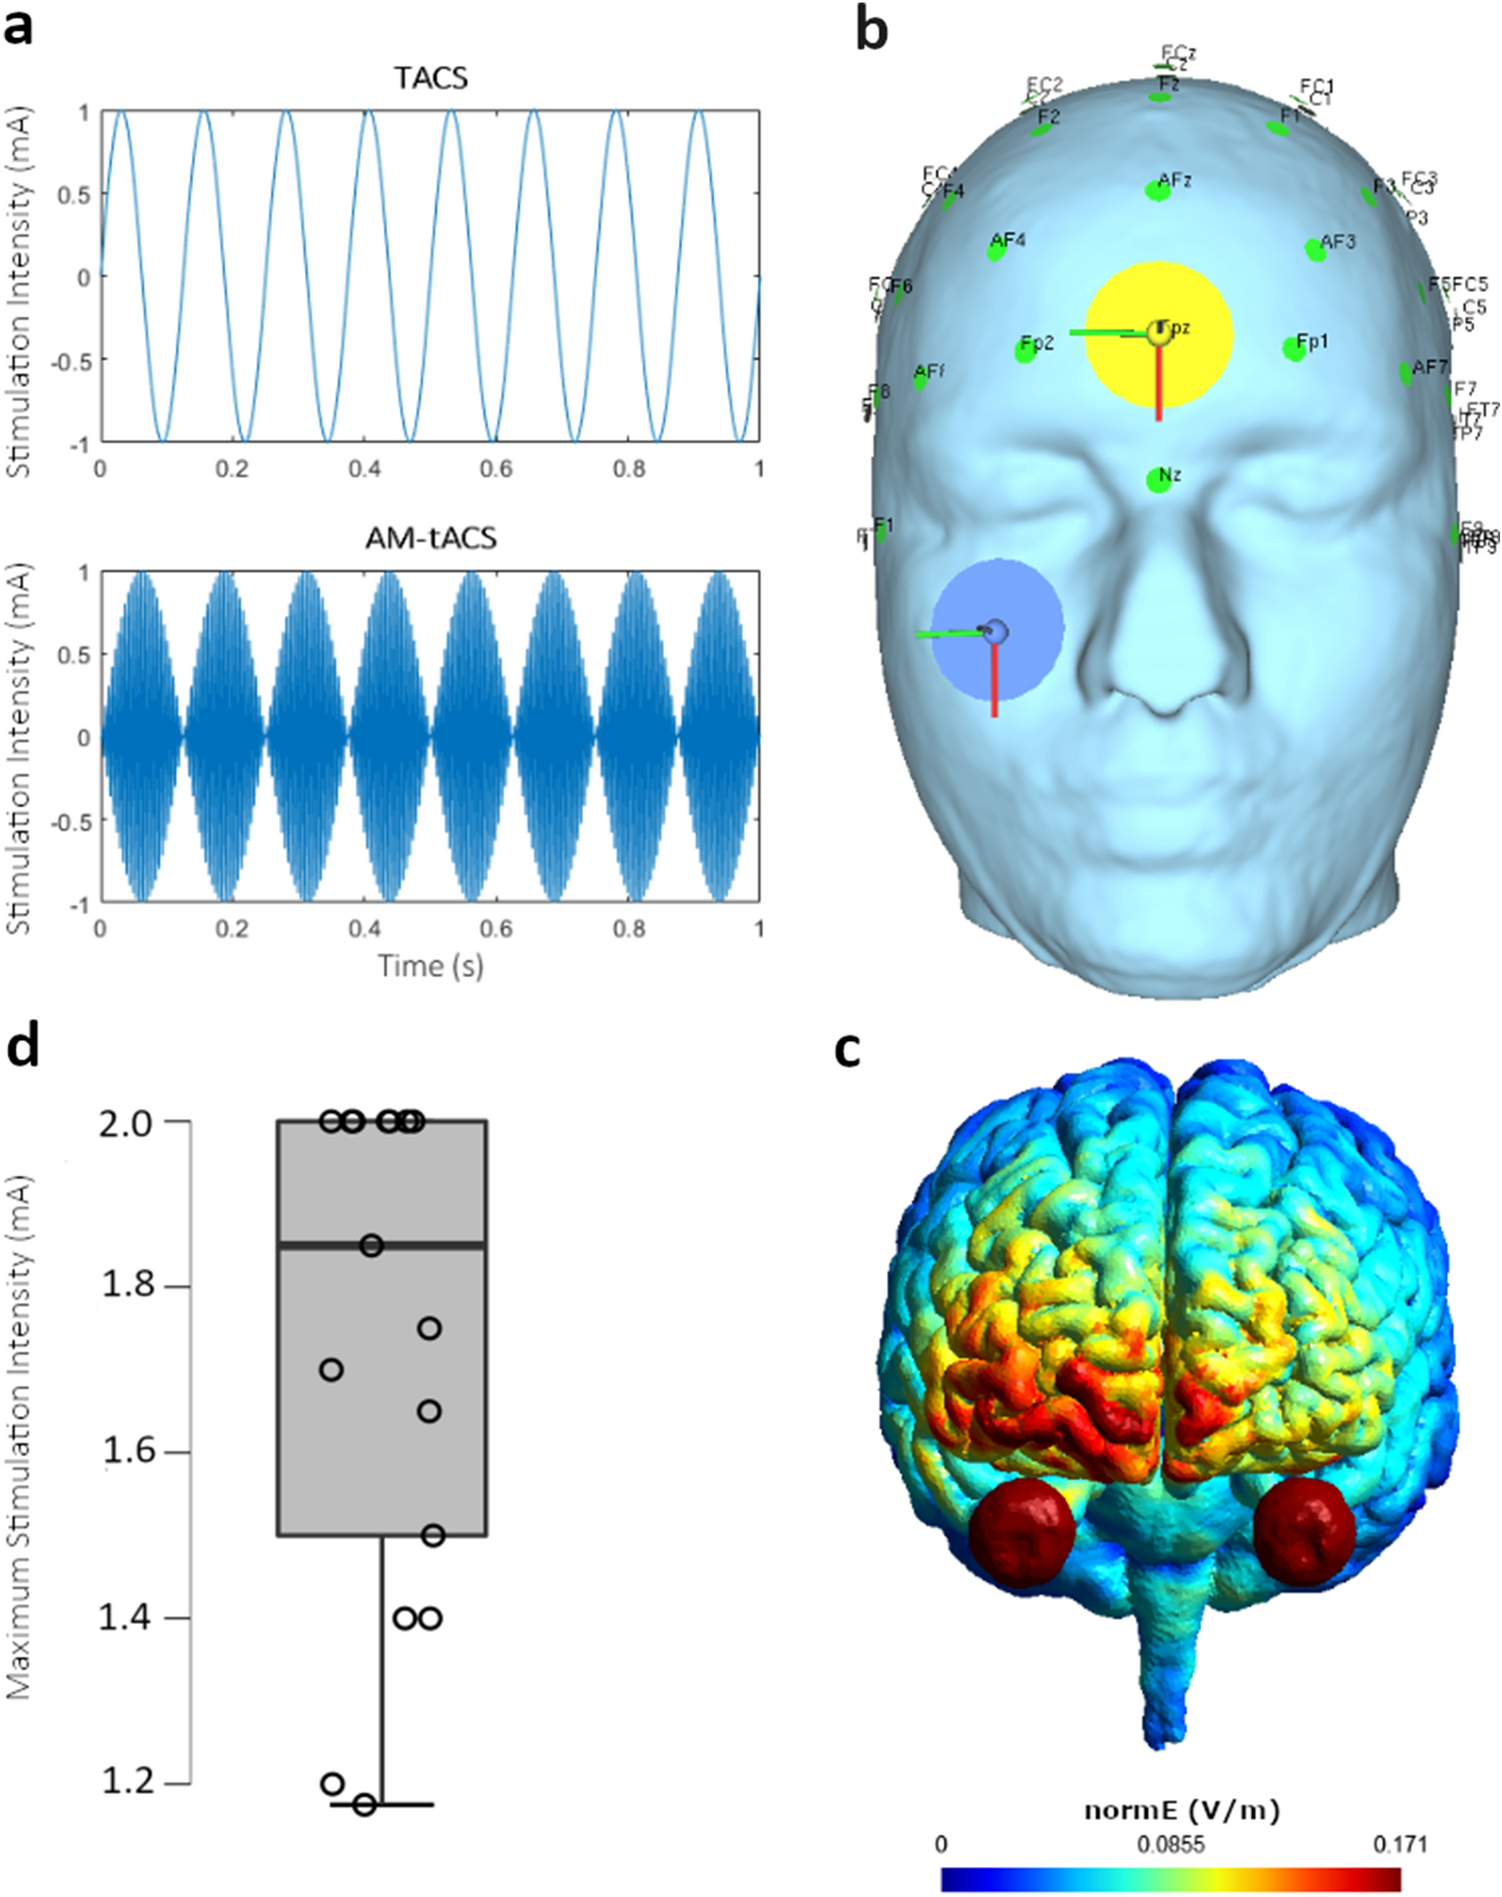 Amplitude modulated transcranial alternating current stimulation (AM-TACS)  efficacy evaluation via phosphene induction